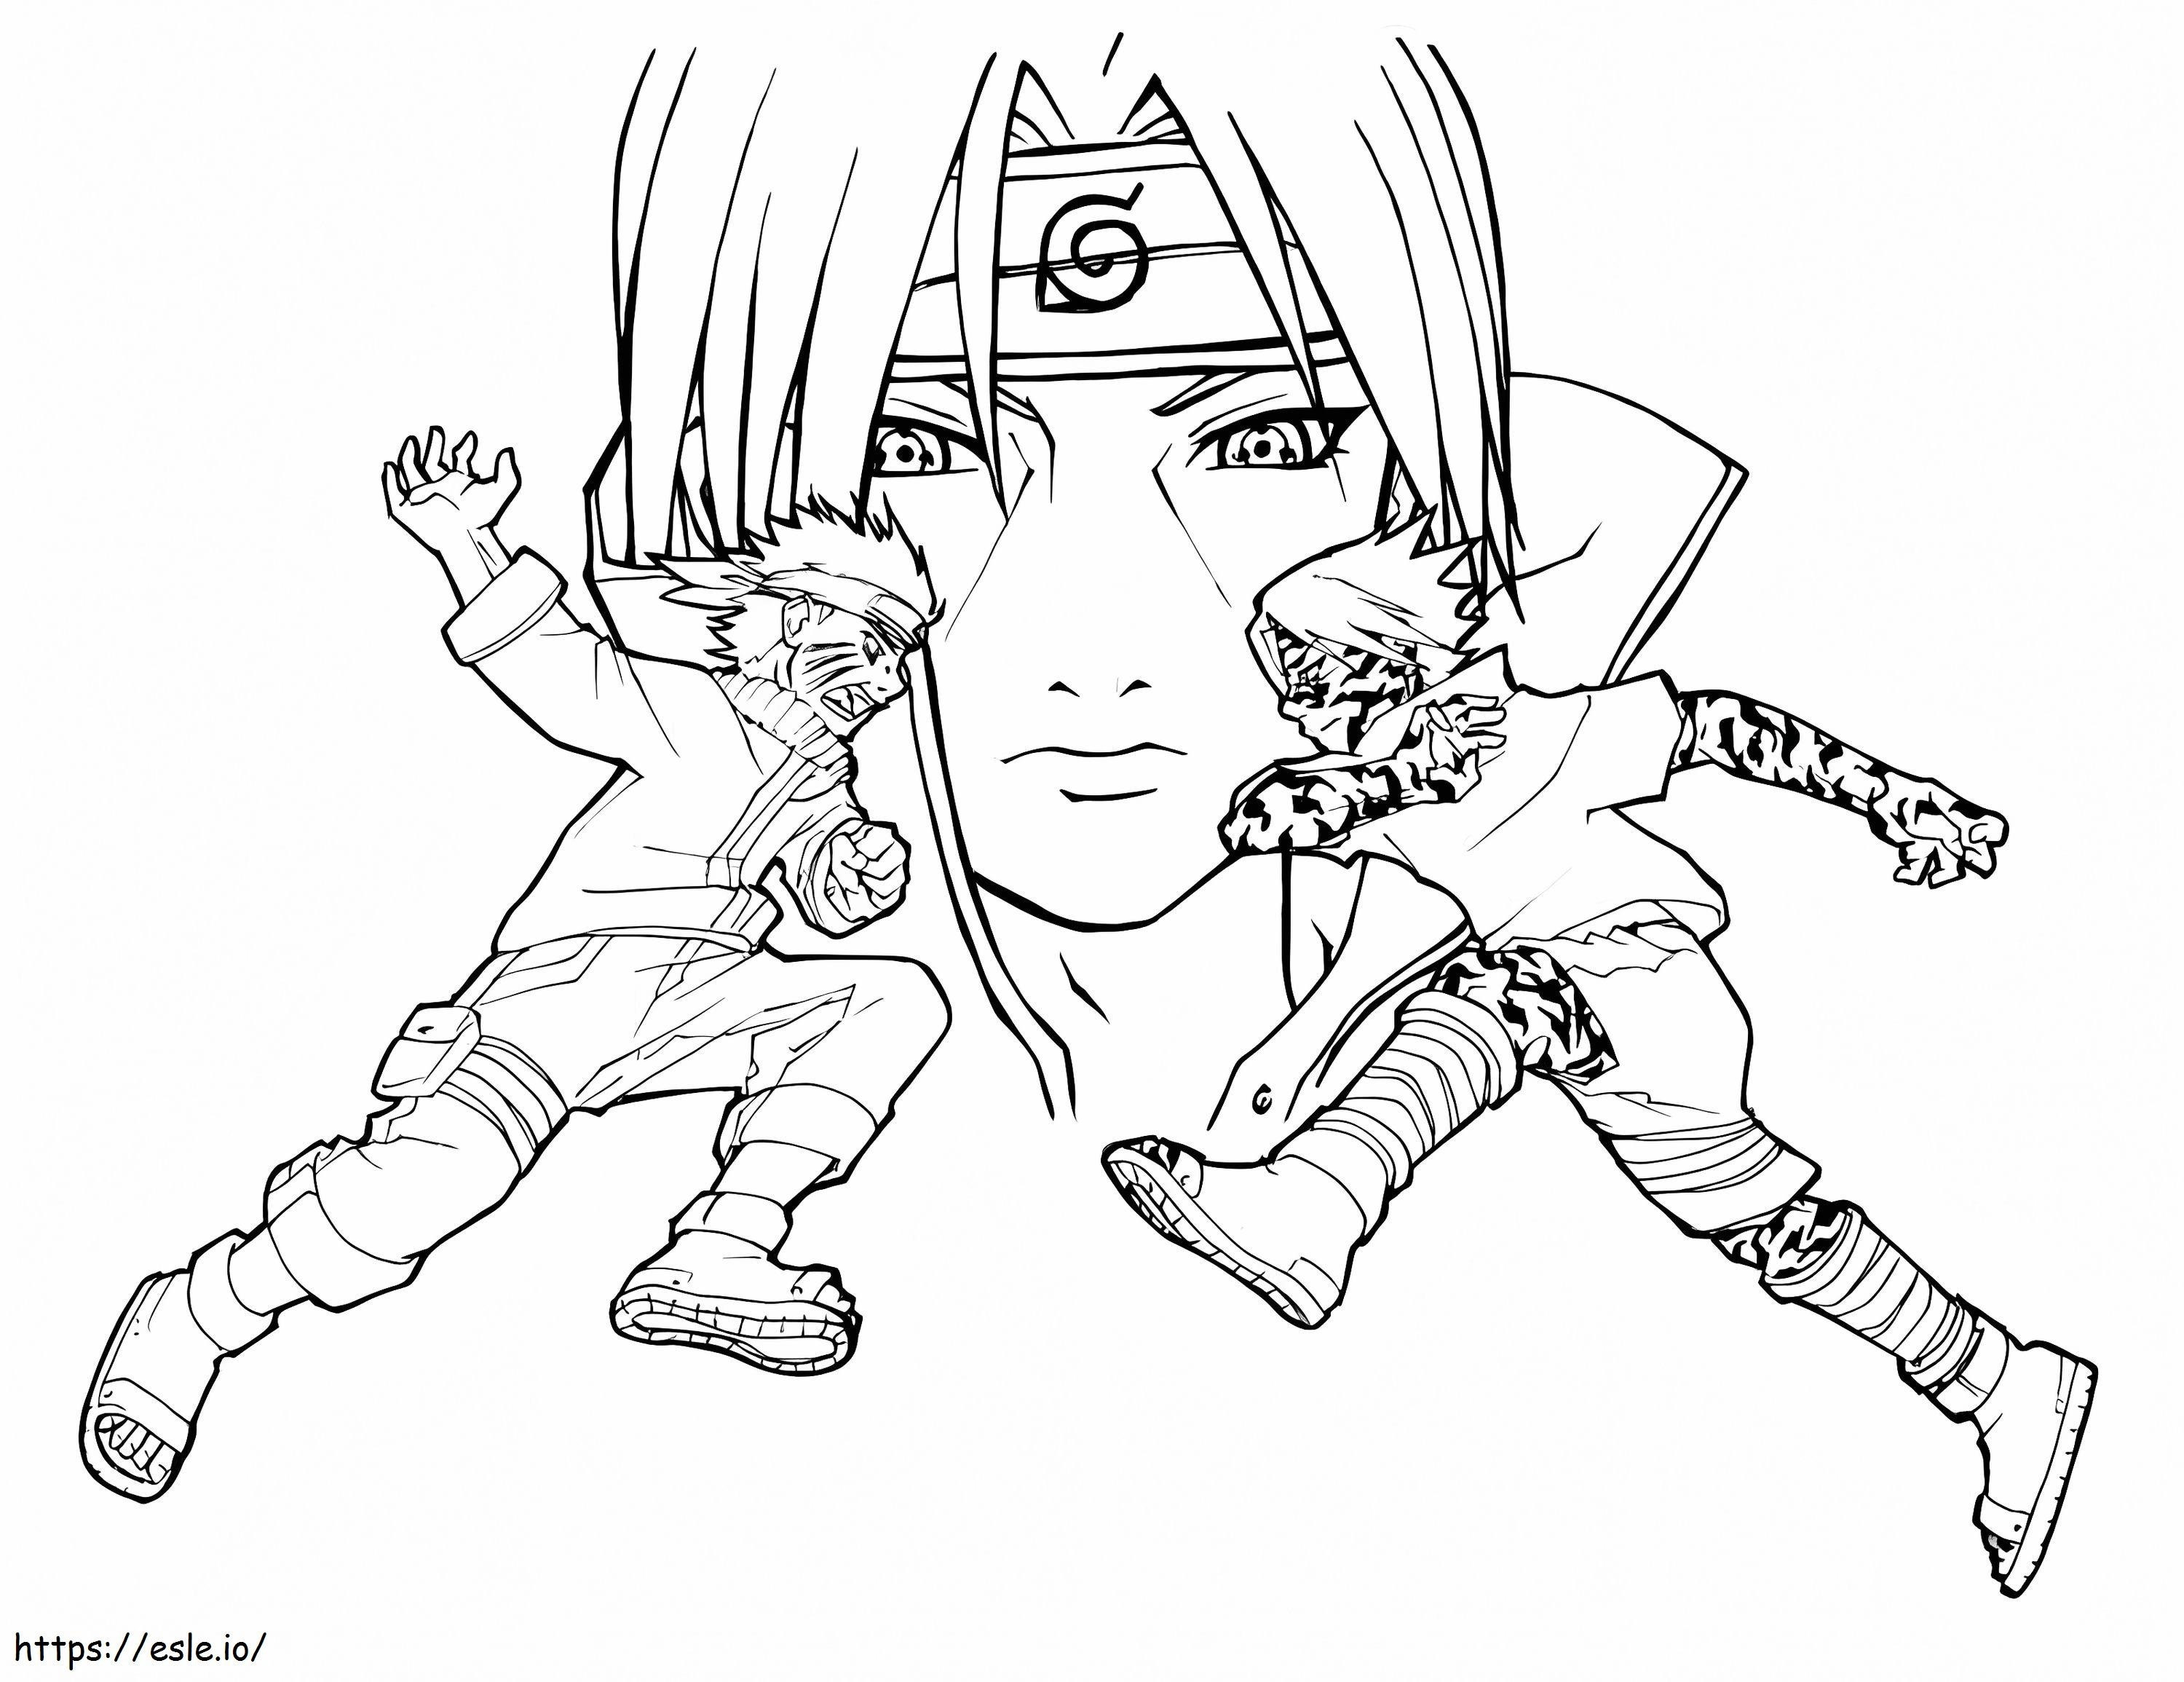 Face Itachi And Naruto Fighting Sasuke coloring page